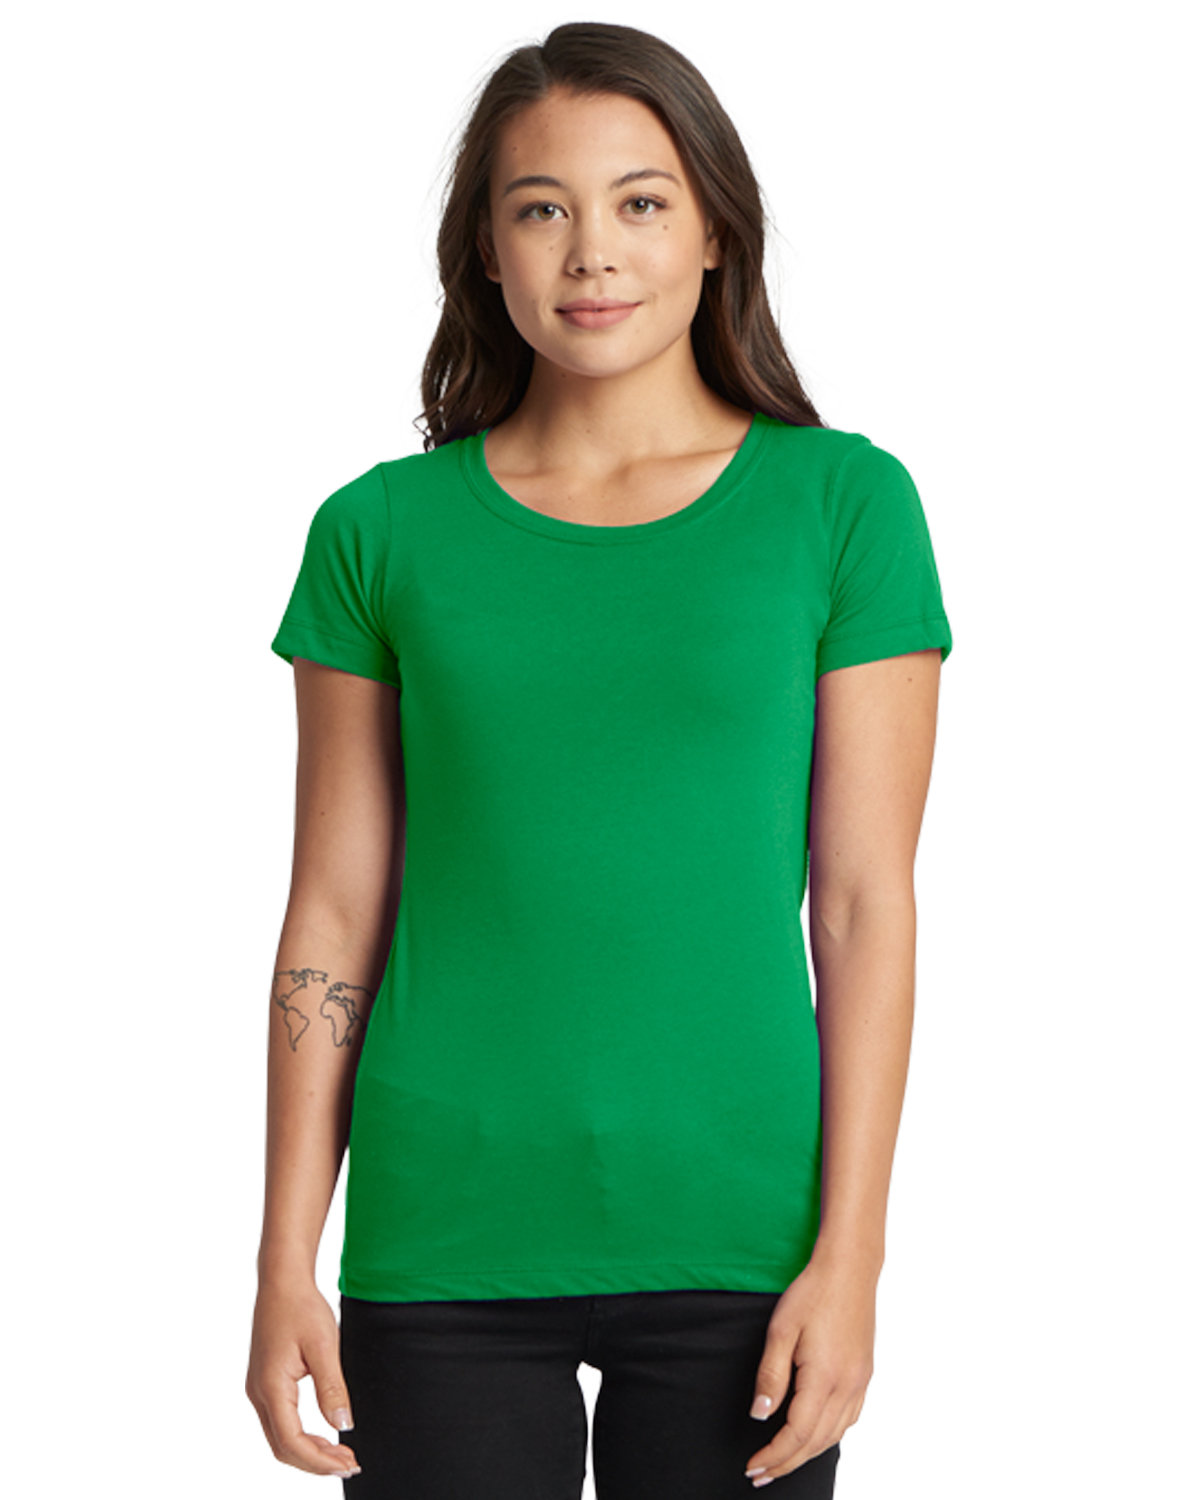 Next Level N1510 Ladies' Ideal T-Shirt–Kelly Green (M)